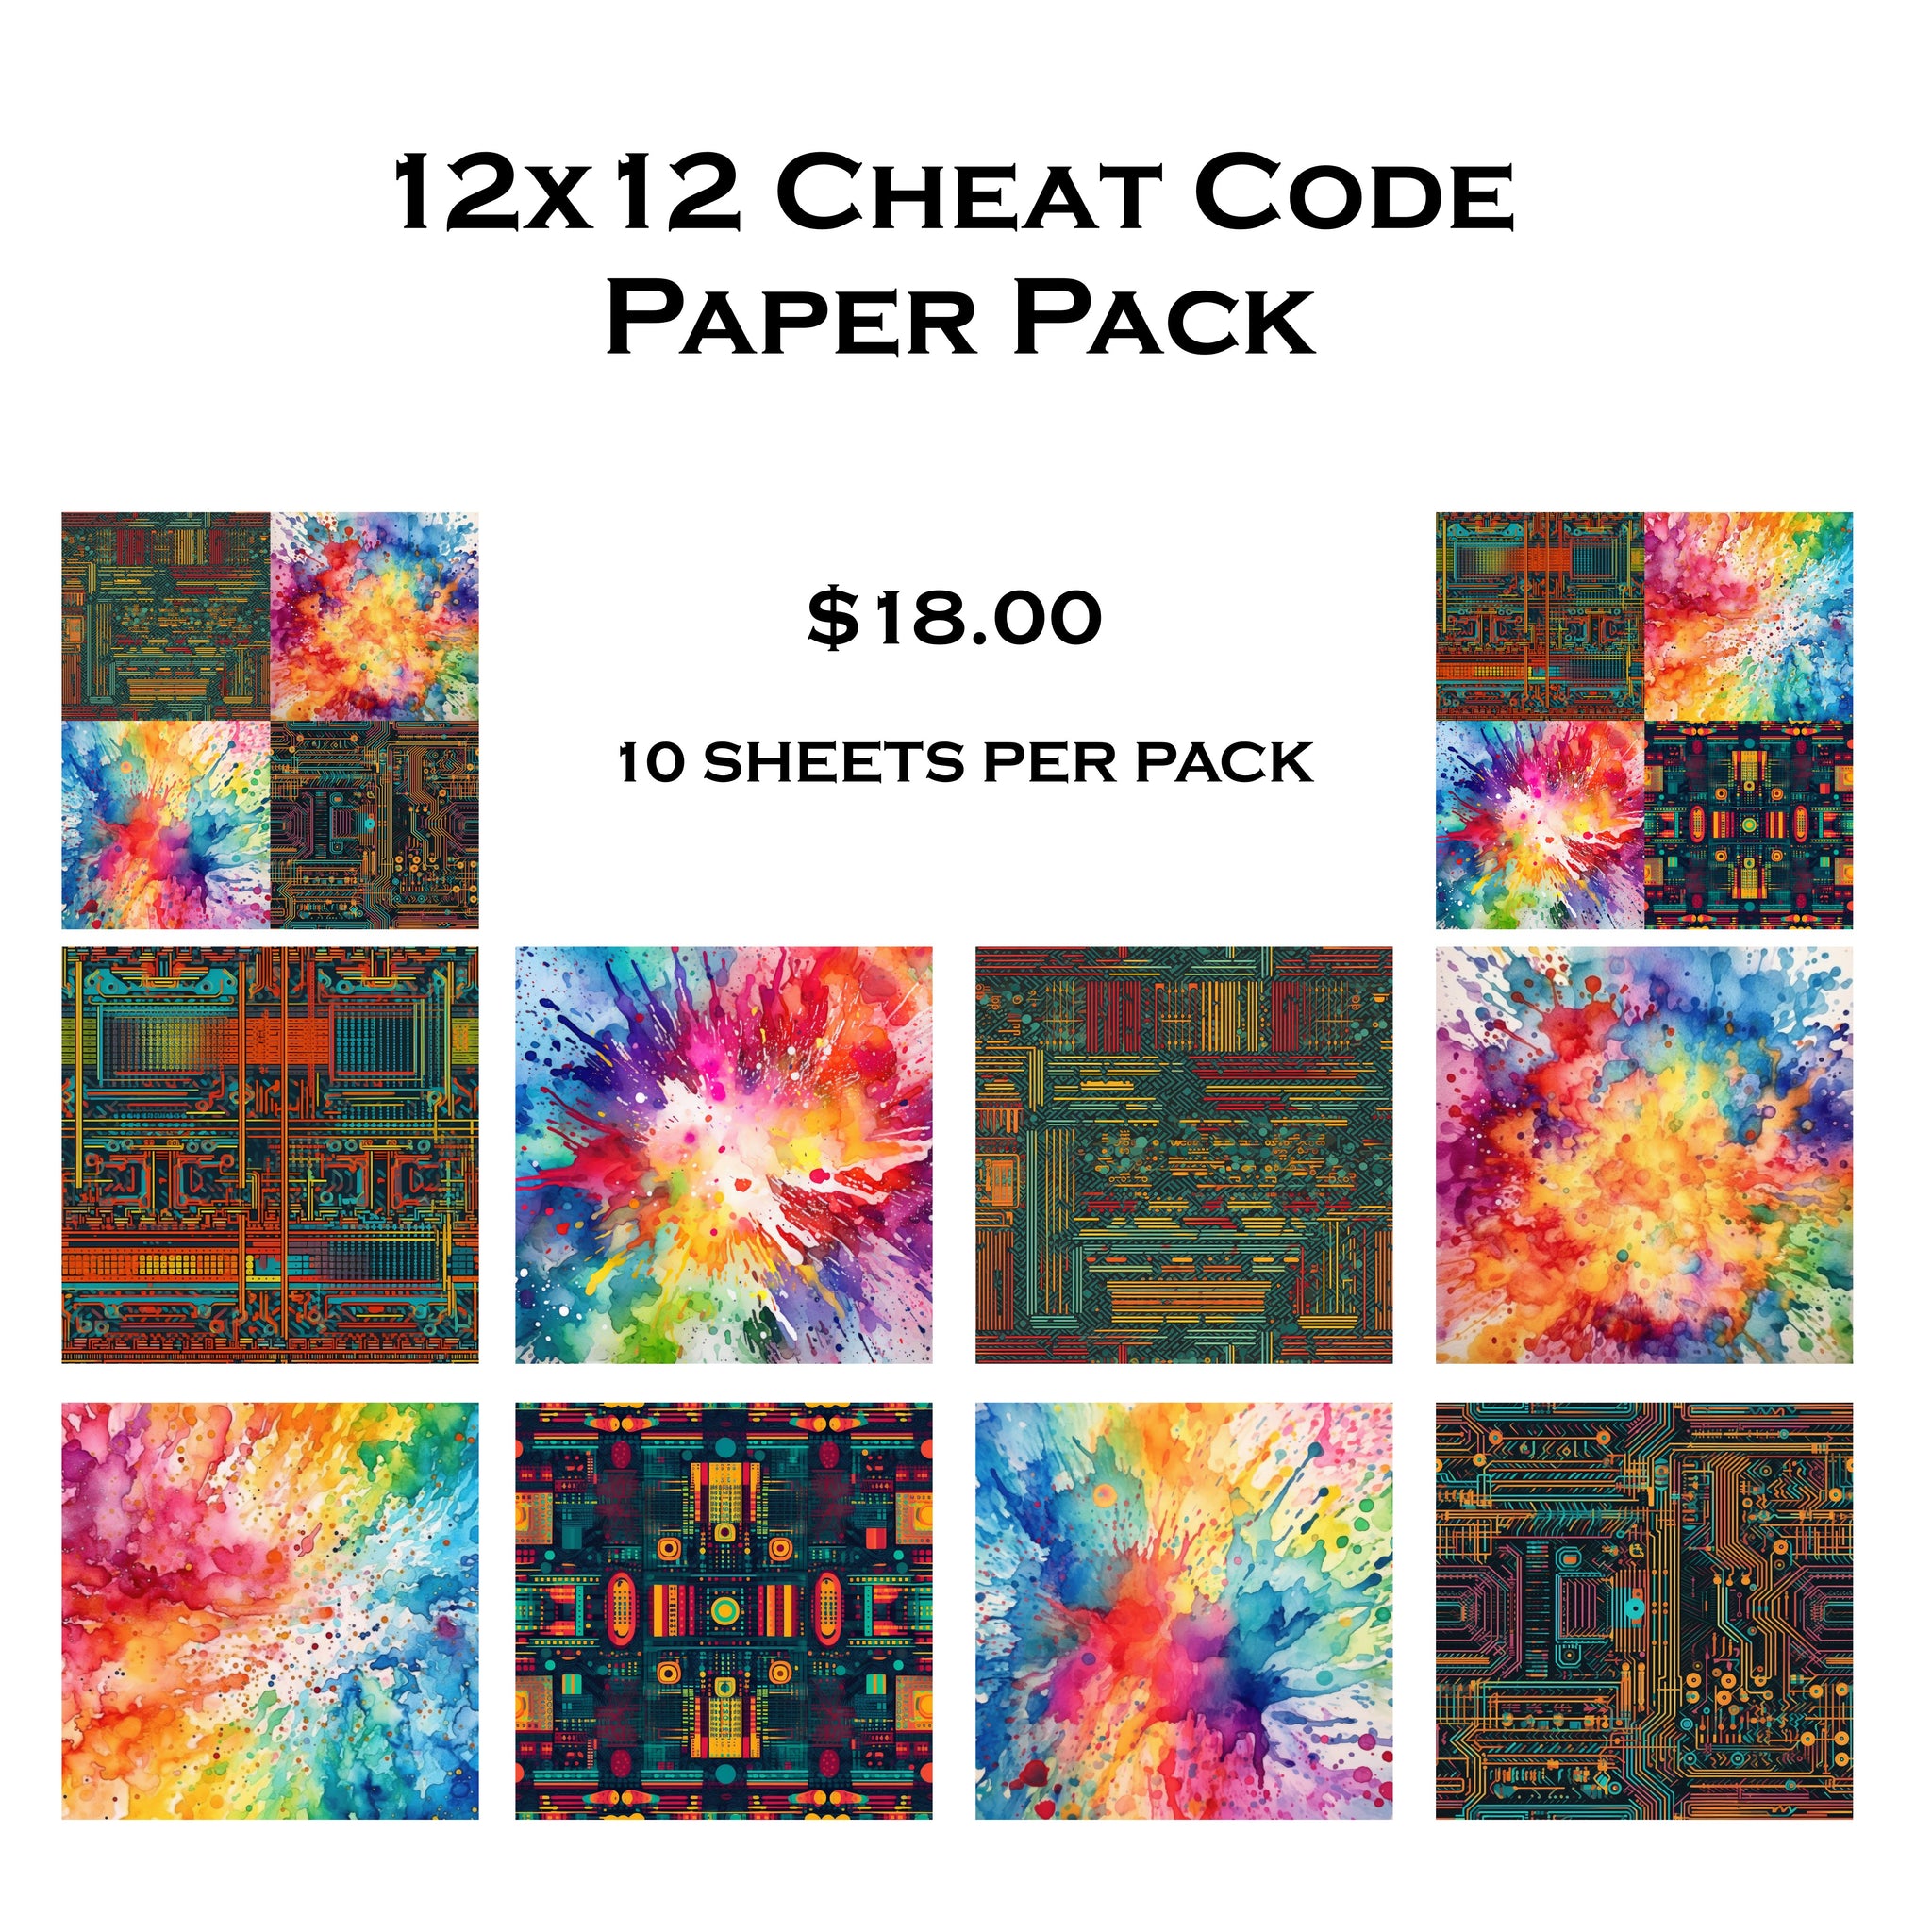 Cheat Code 12x12 Paper Pack